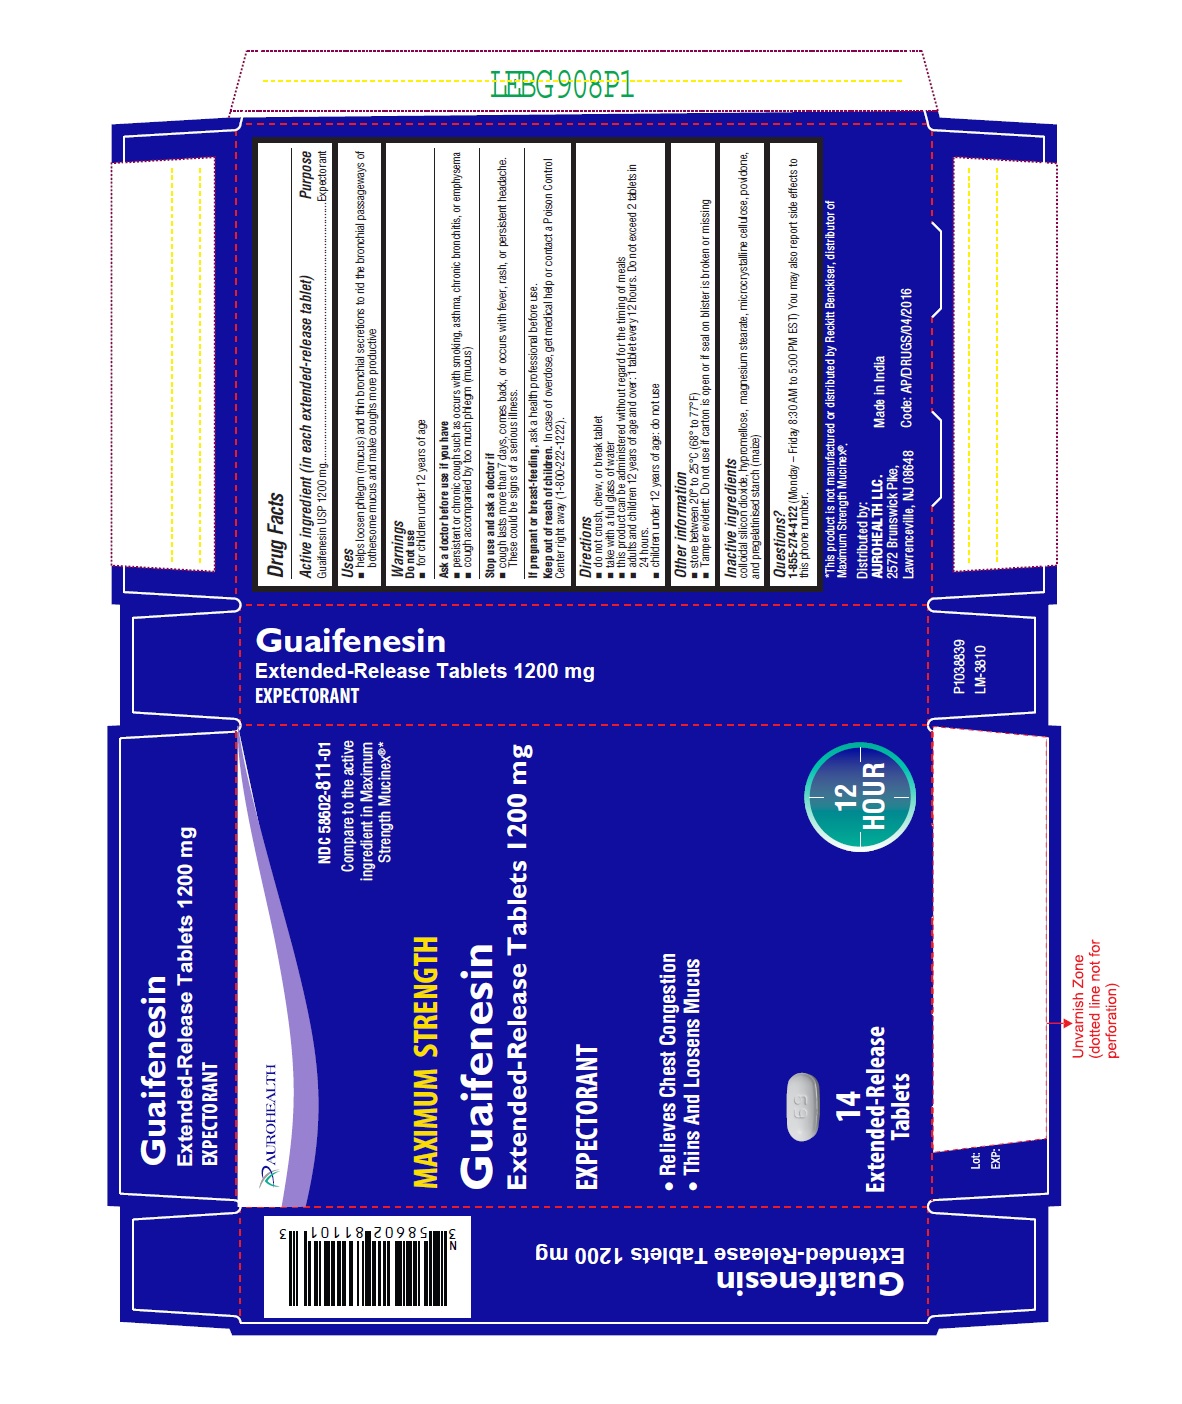 PACKAGE LABEL-PRINCIPAL DISPLAY PANEL - 1200 mg Blister Carton (14 (1 x 14) Tablets)